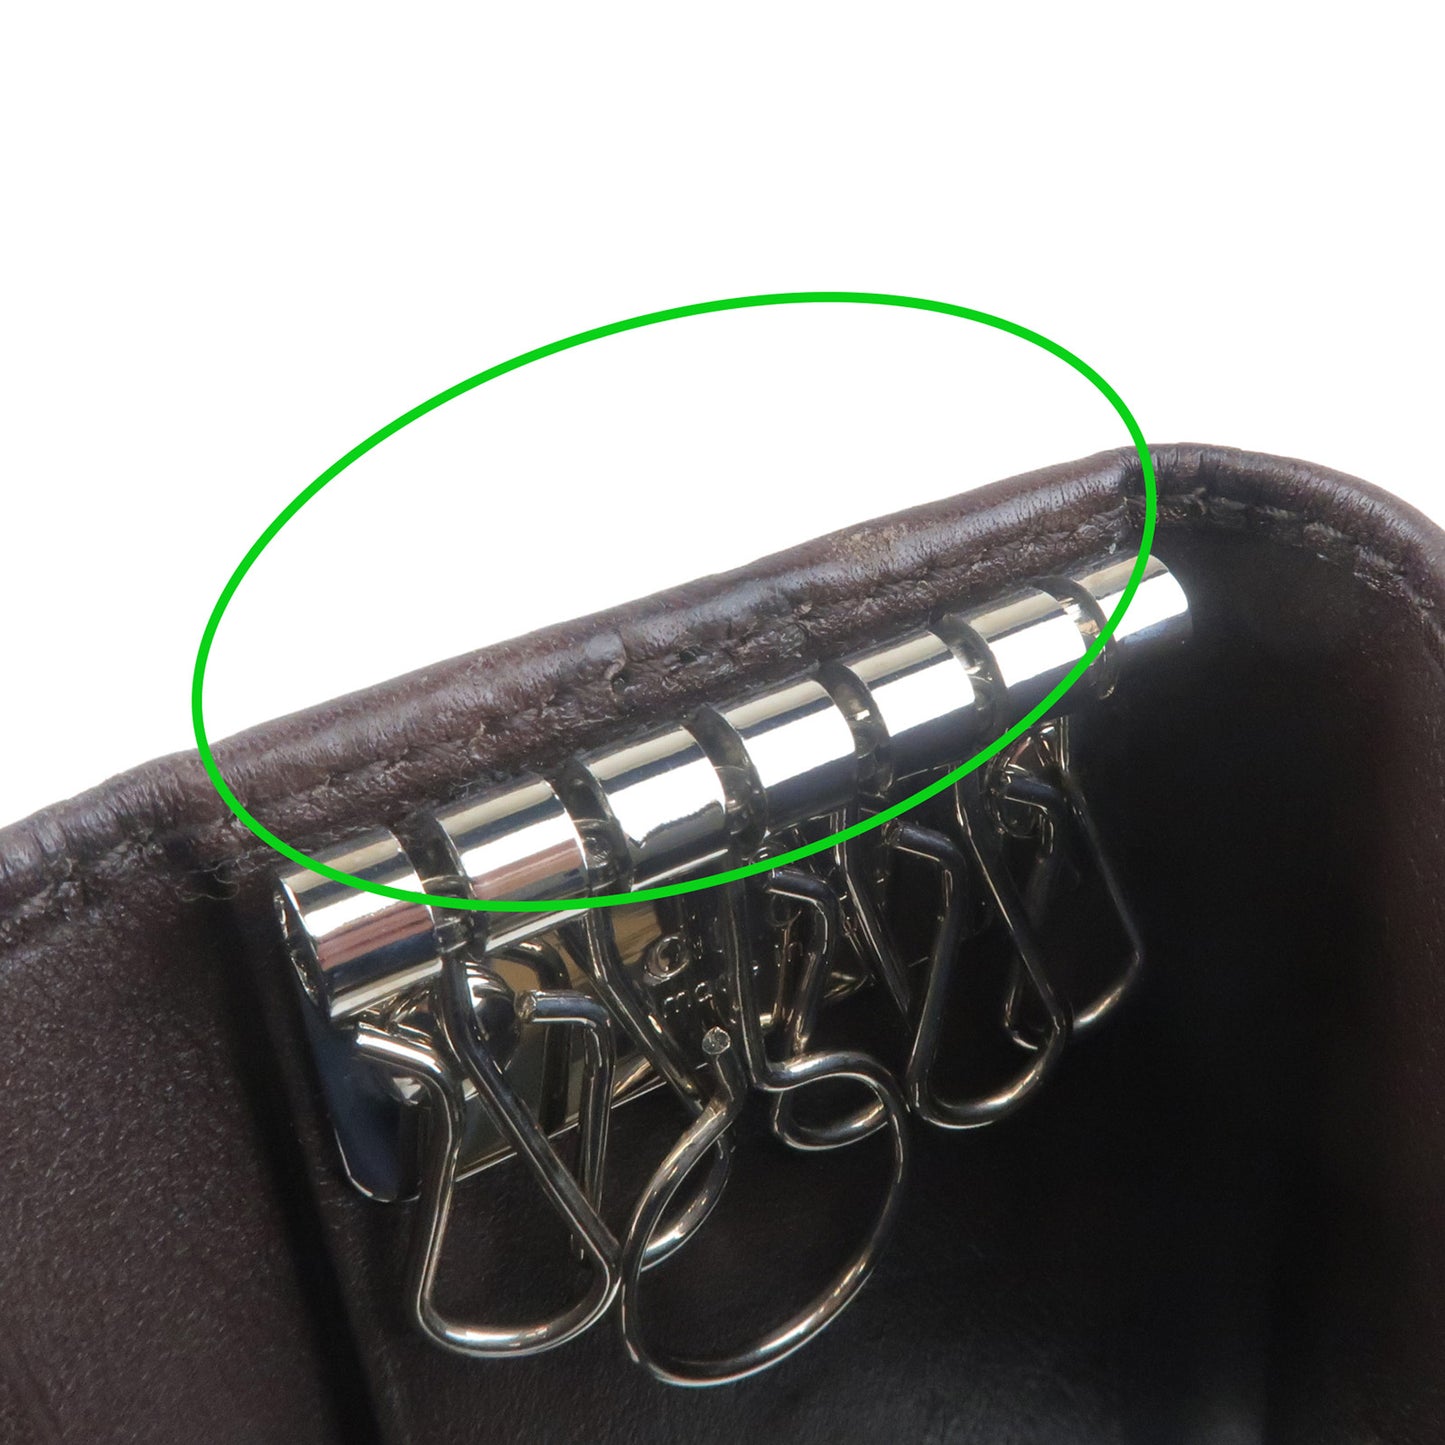 GUCCI Guccissima Leather Interlocking G 6 Ring Key Case 181680